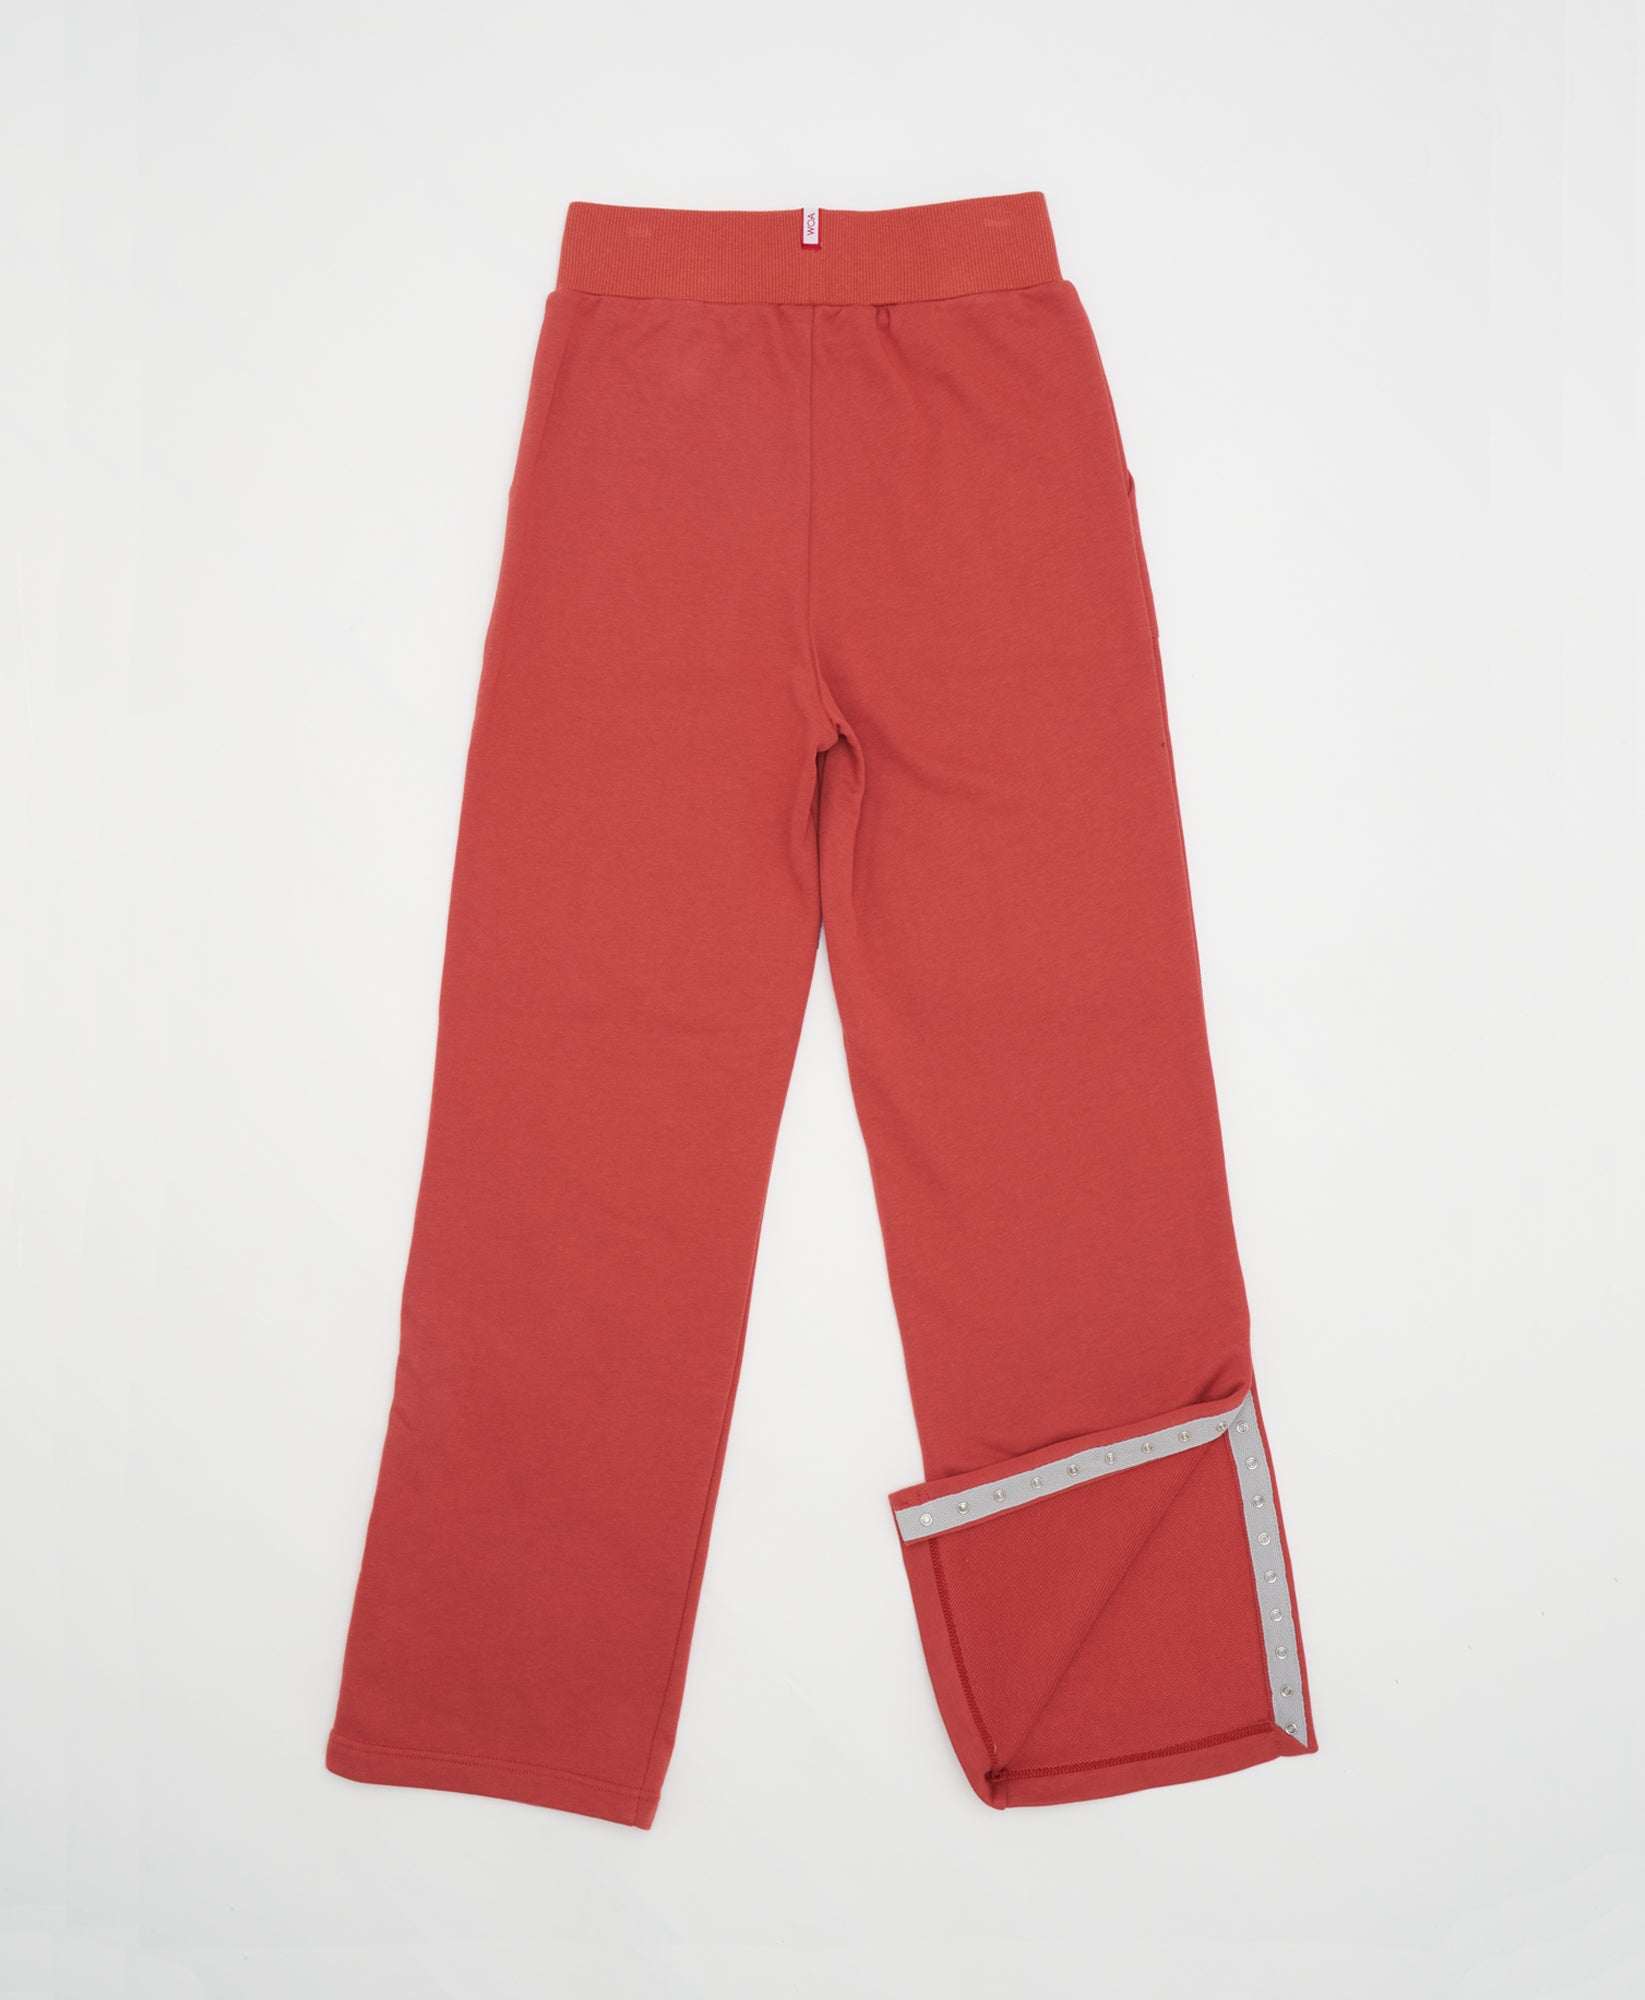 Wear One's At Slashleg Sweatpants in Sepia Pink Flat Front